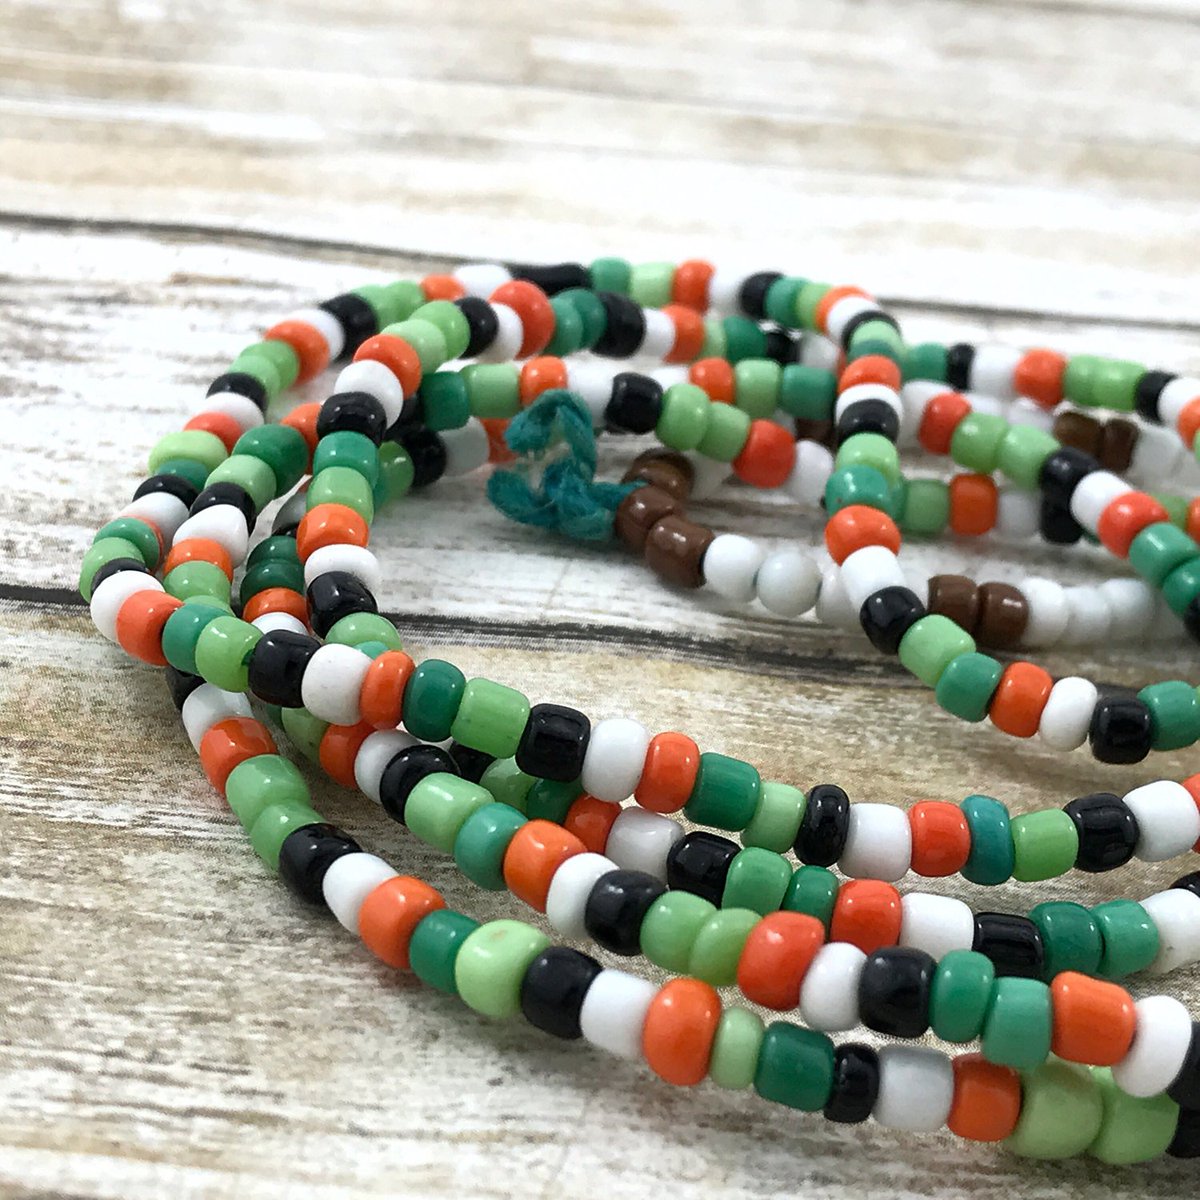 Vintage Hippy Bead Necklace, Colorful Glass Bead Ethnic Tribal Nec… etsy.me/2mHaeq4 #Etsyshop #HippyNecklace